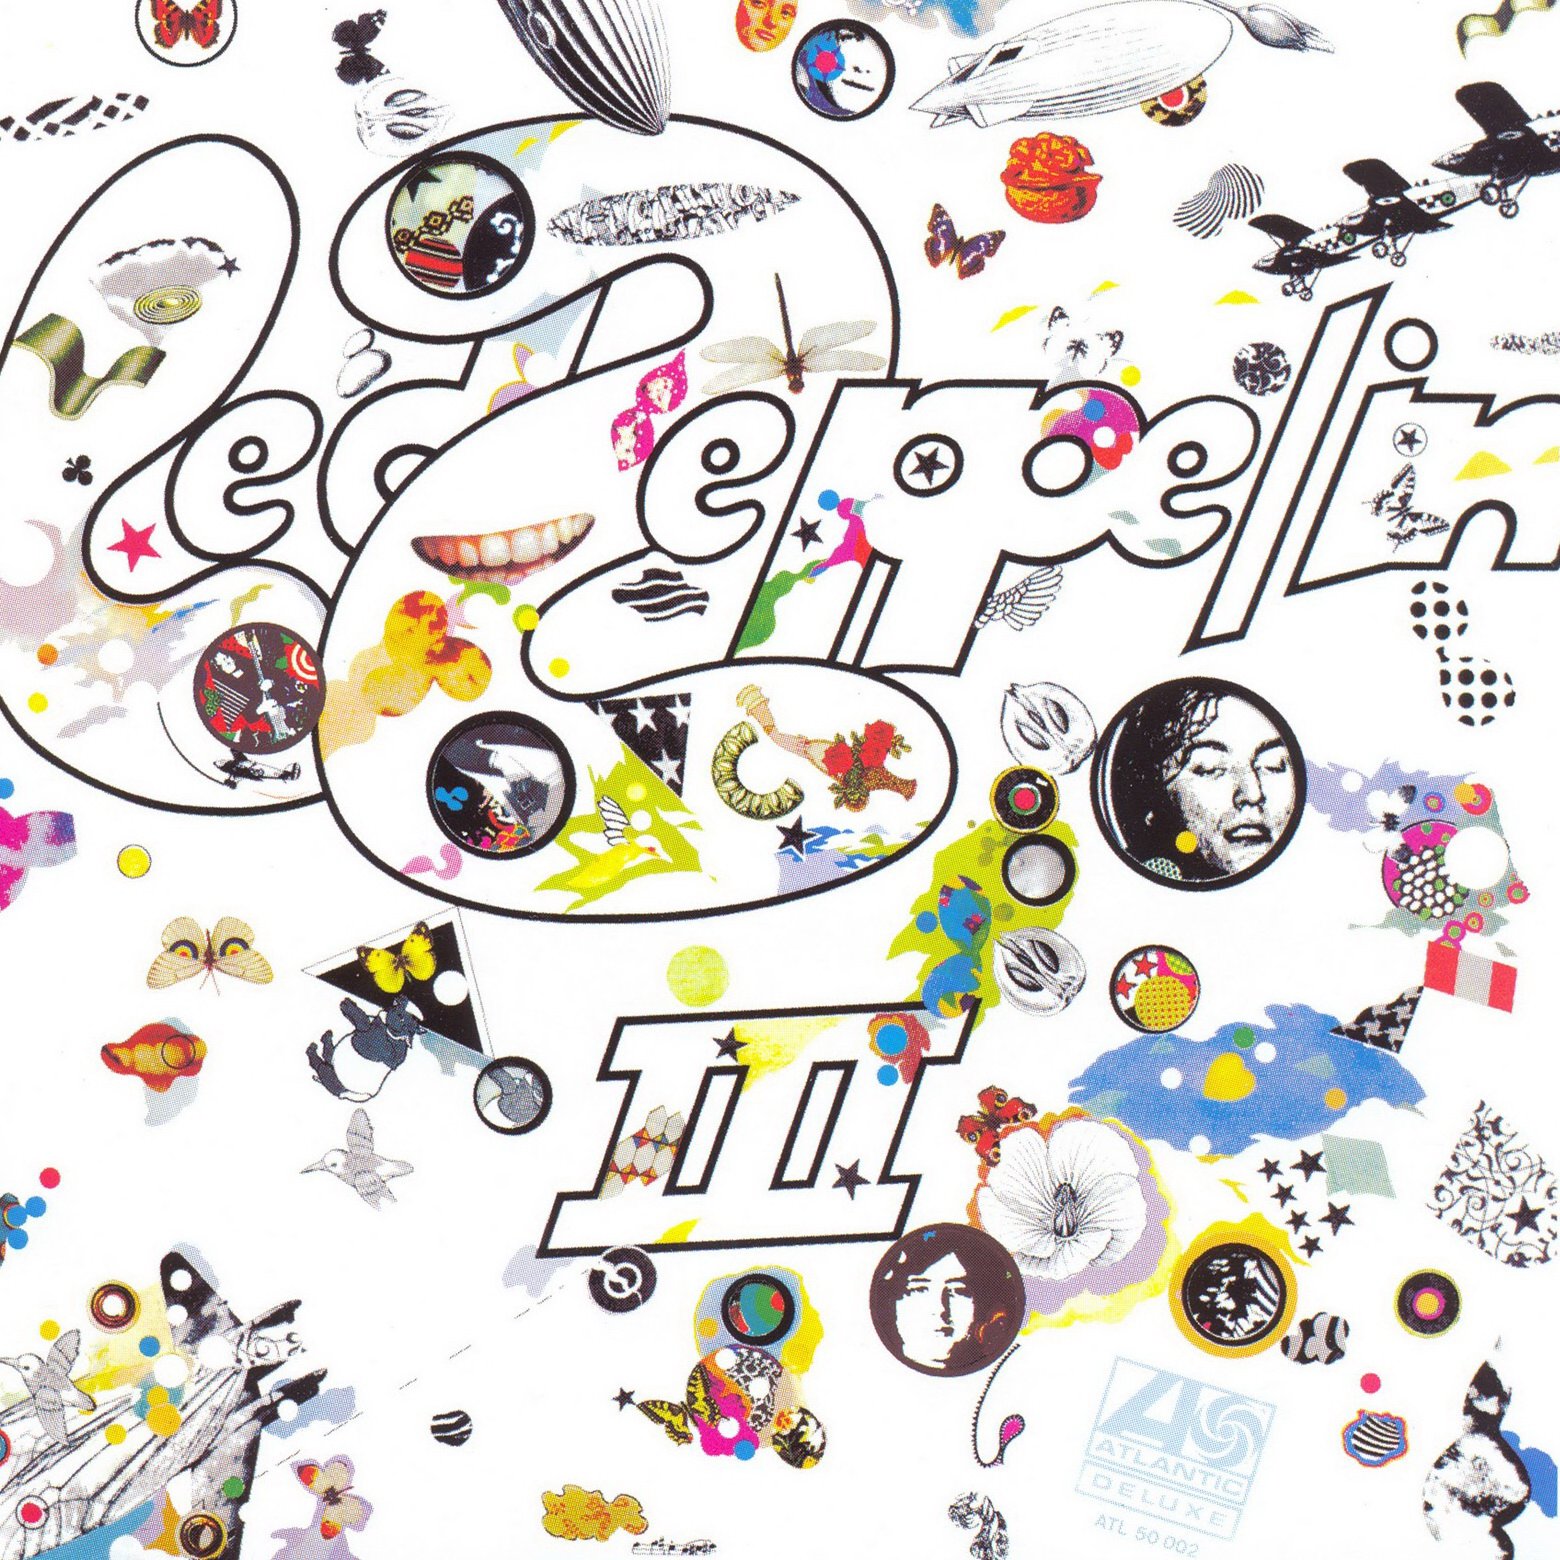 Led Zeppelin III — Led Zeppelin | Last.fm